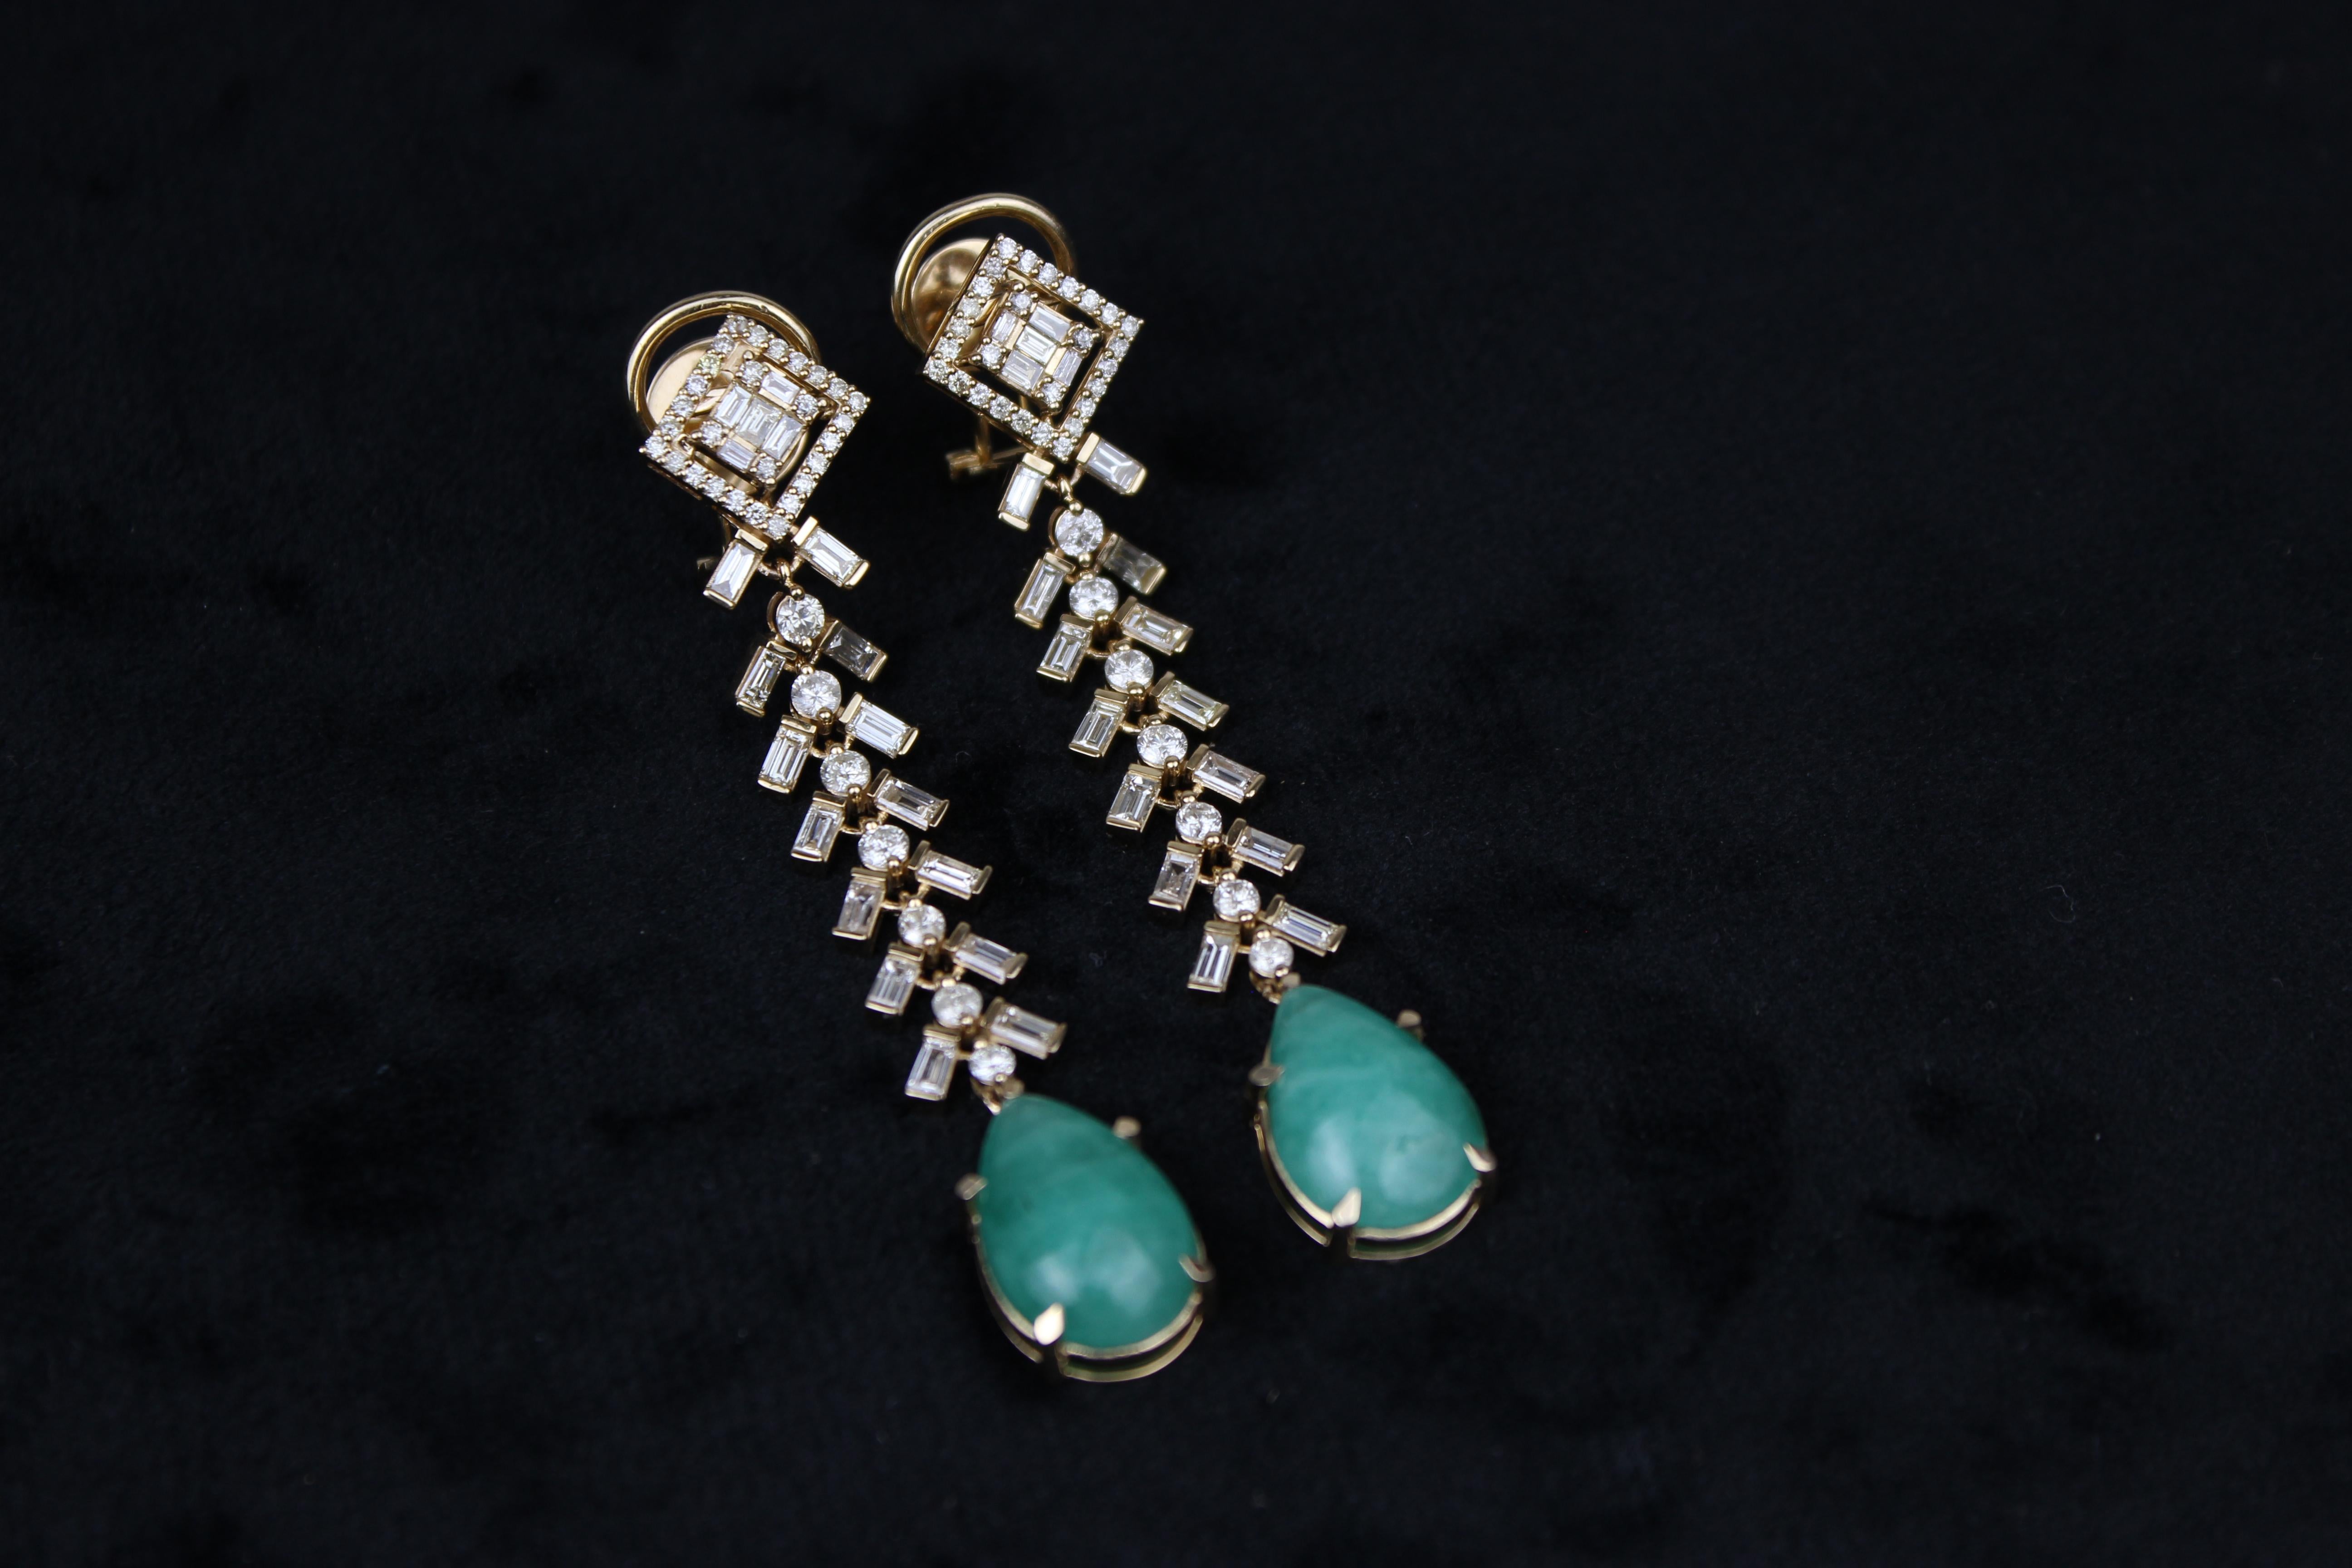 Baguette Cut Tear Drop Emerald Gemstone and Diamond Earrings in 18k Solid Gold For Sale